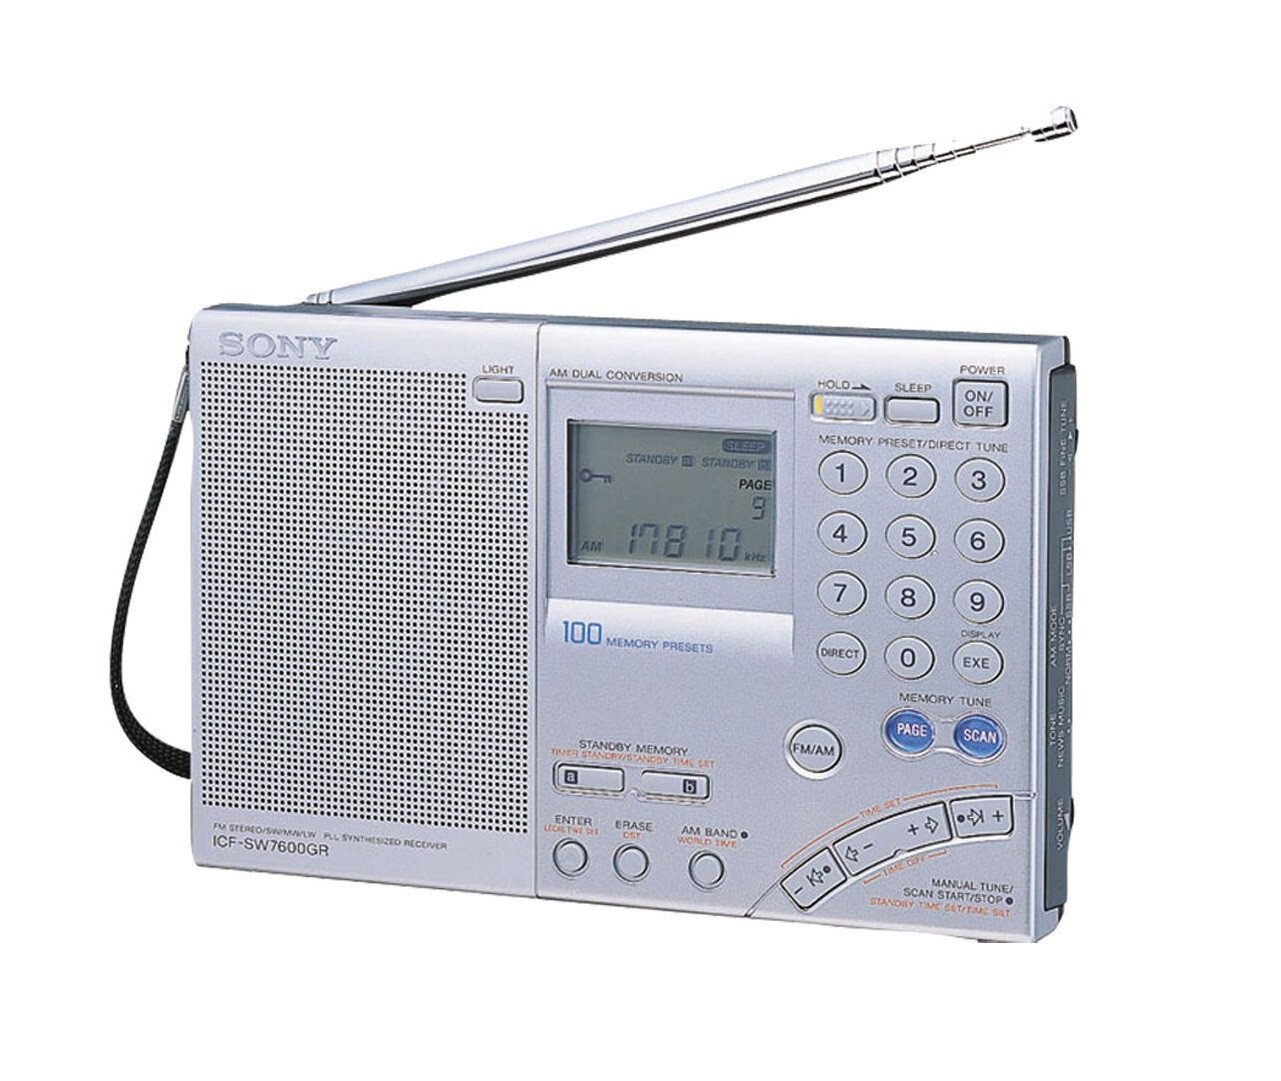 Buy Sony Portable Radio with Speaker - ICF-SW7600GR online in UAE